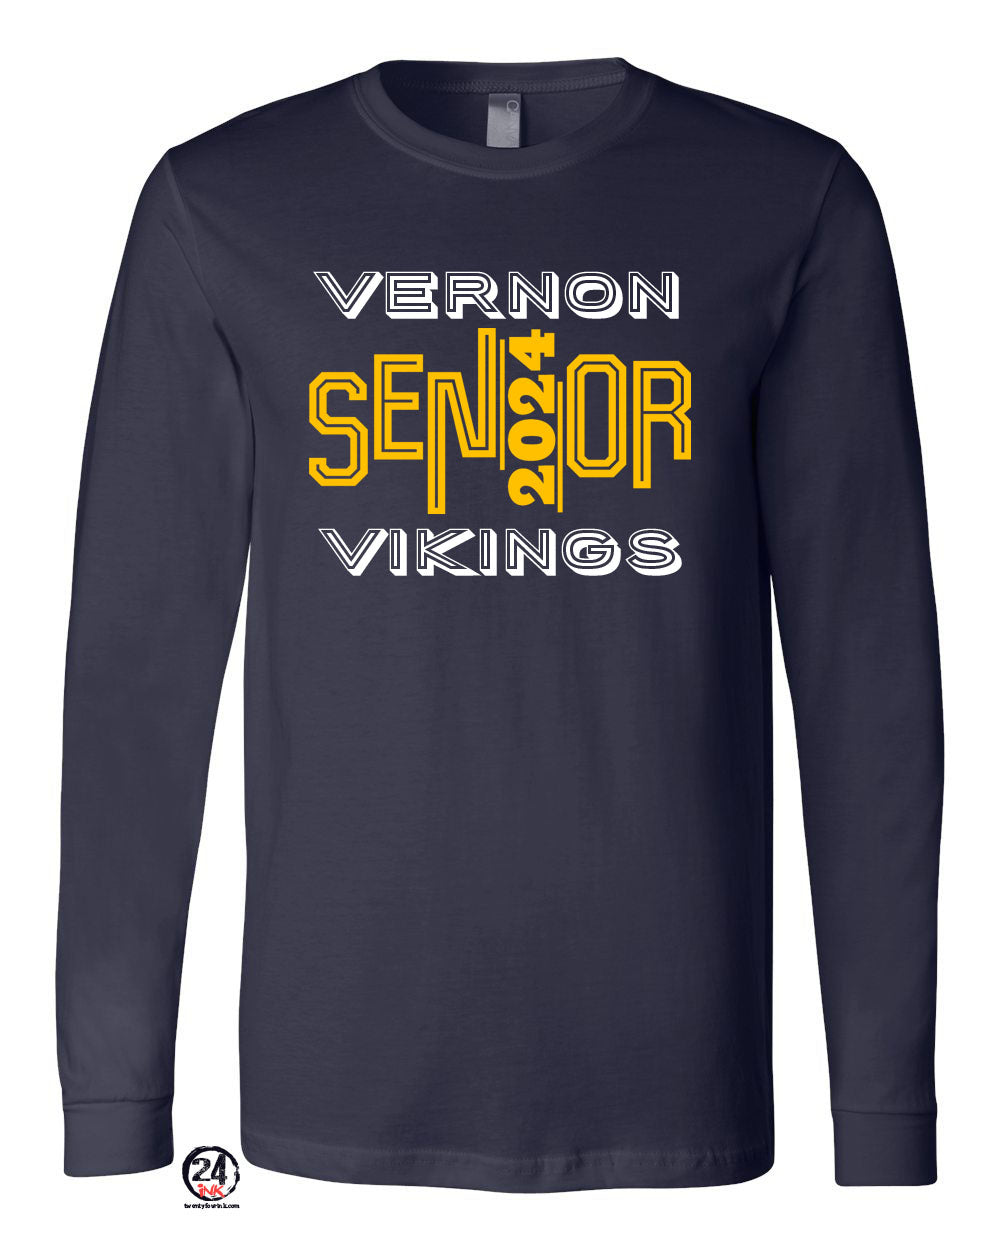 VTHS Design 6 Long Sleeve Shirt